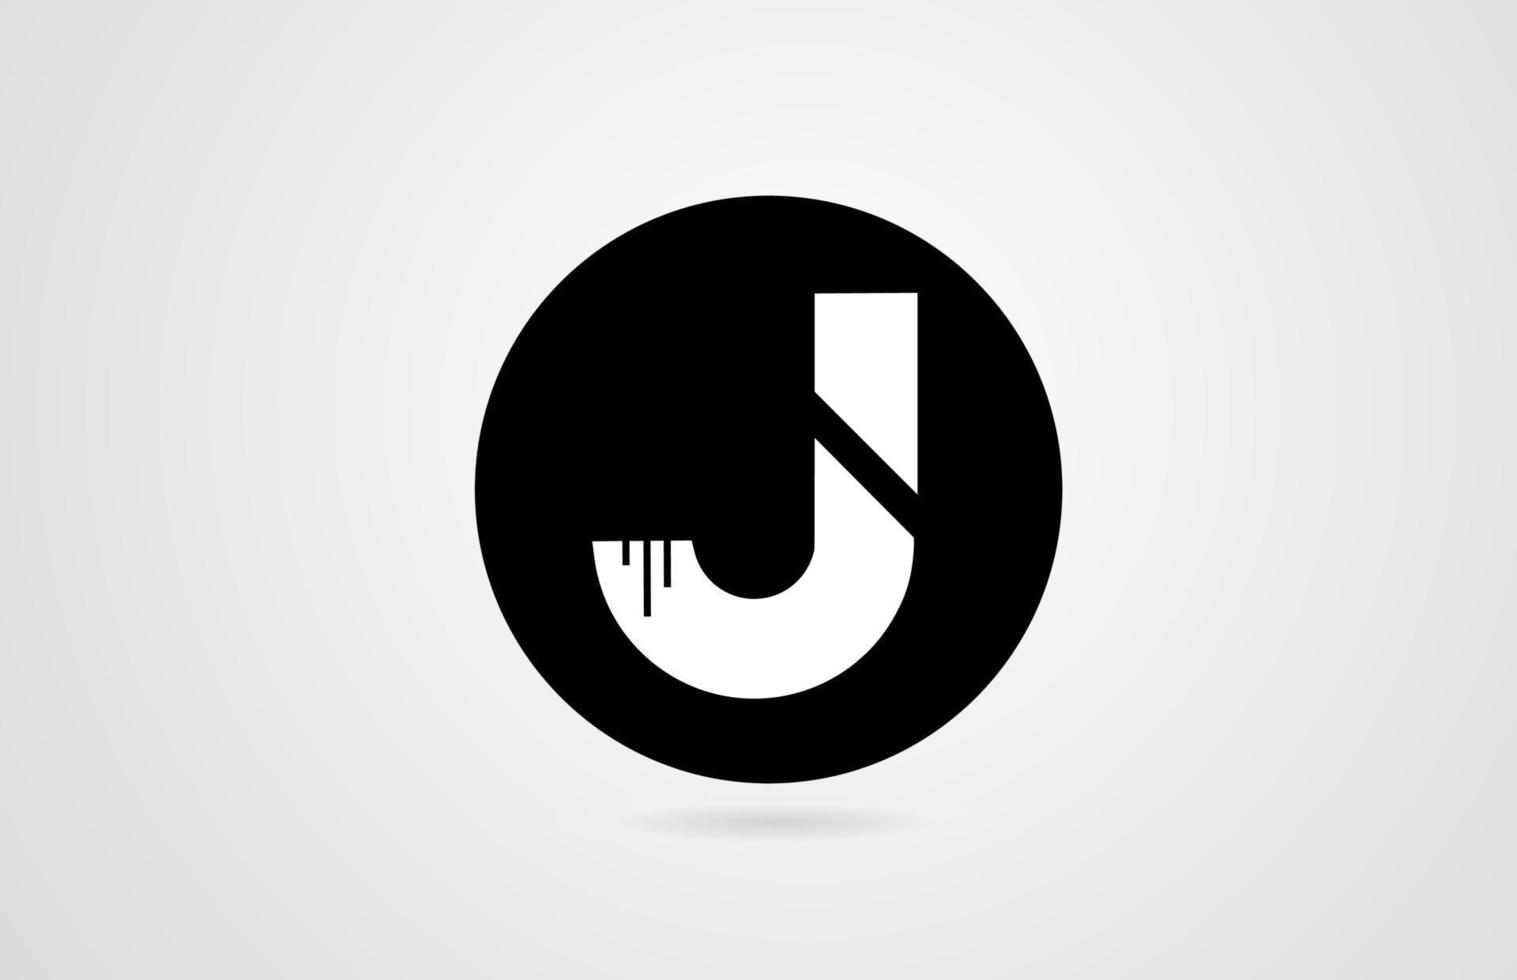 J white alphabet letter black circle company business logo icon design corporate vector